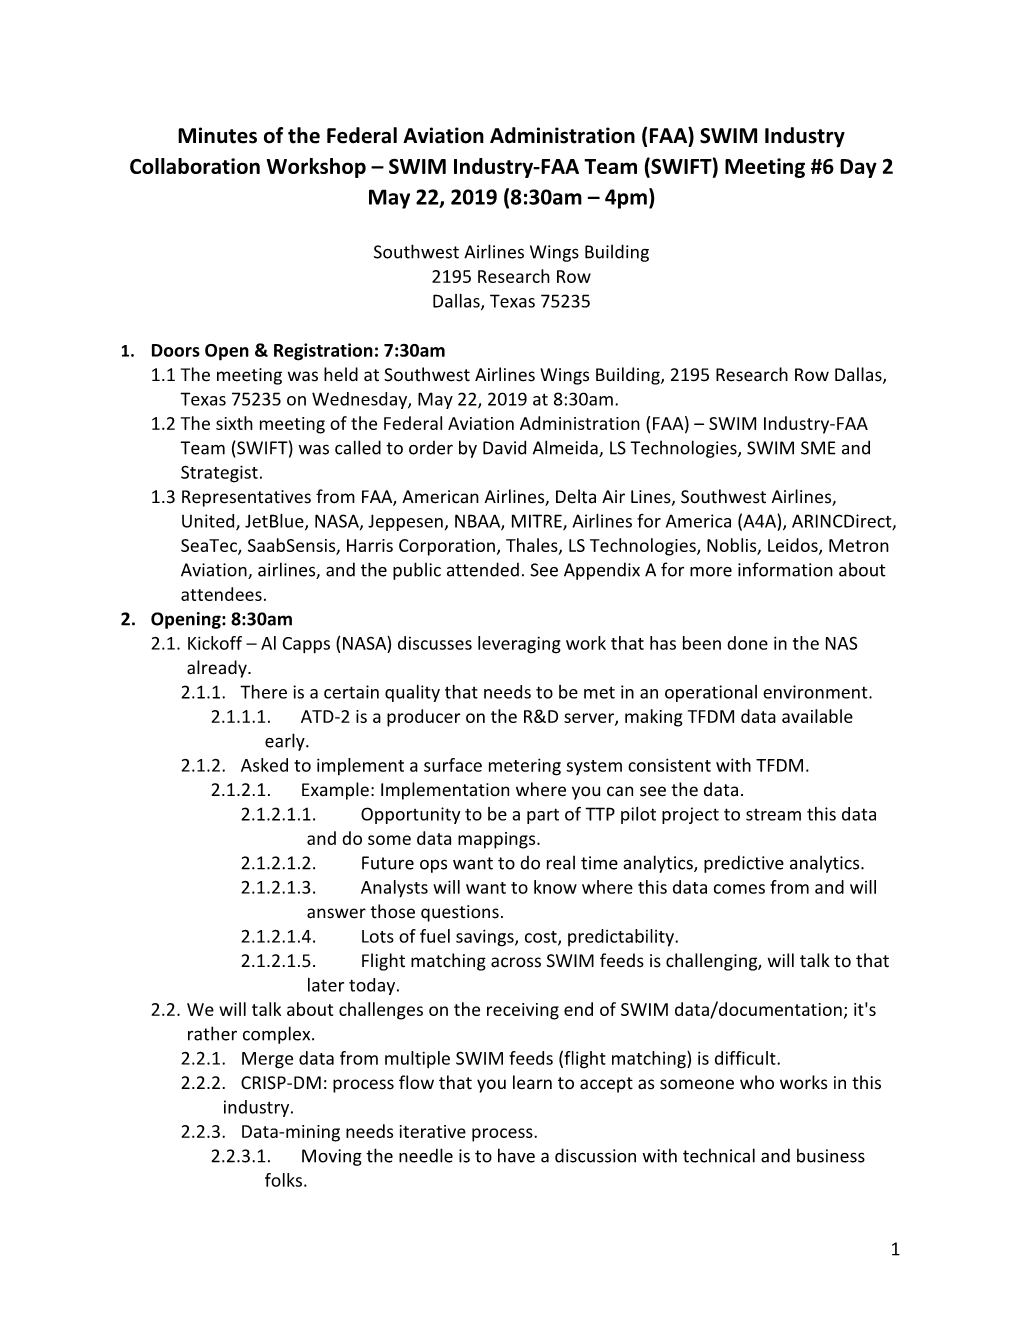 SWIM Industry-FAA Team (SWIFT) Meeting #6 Day 2 May 22, 2019 (8:30Am – 4Pm)